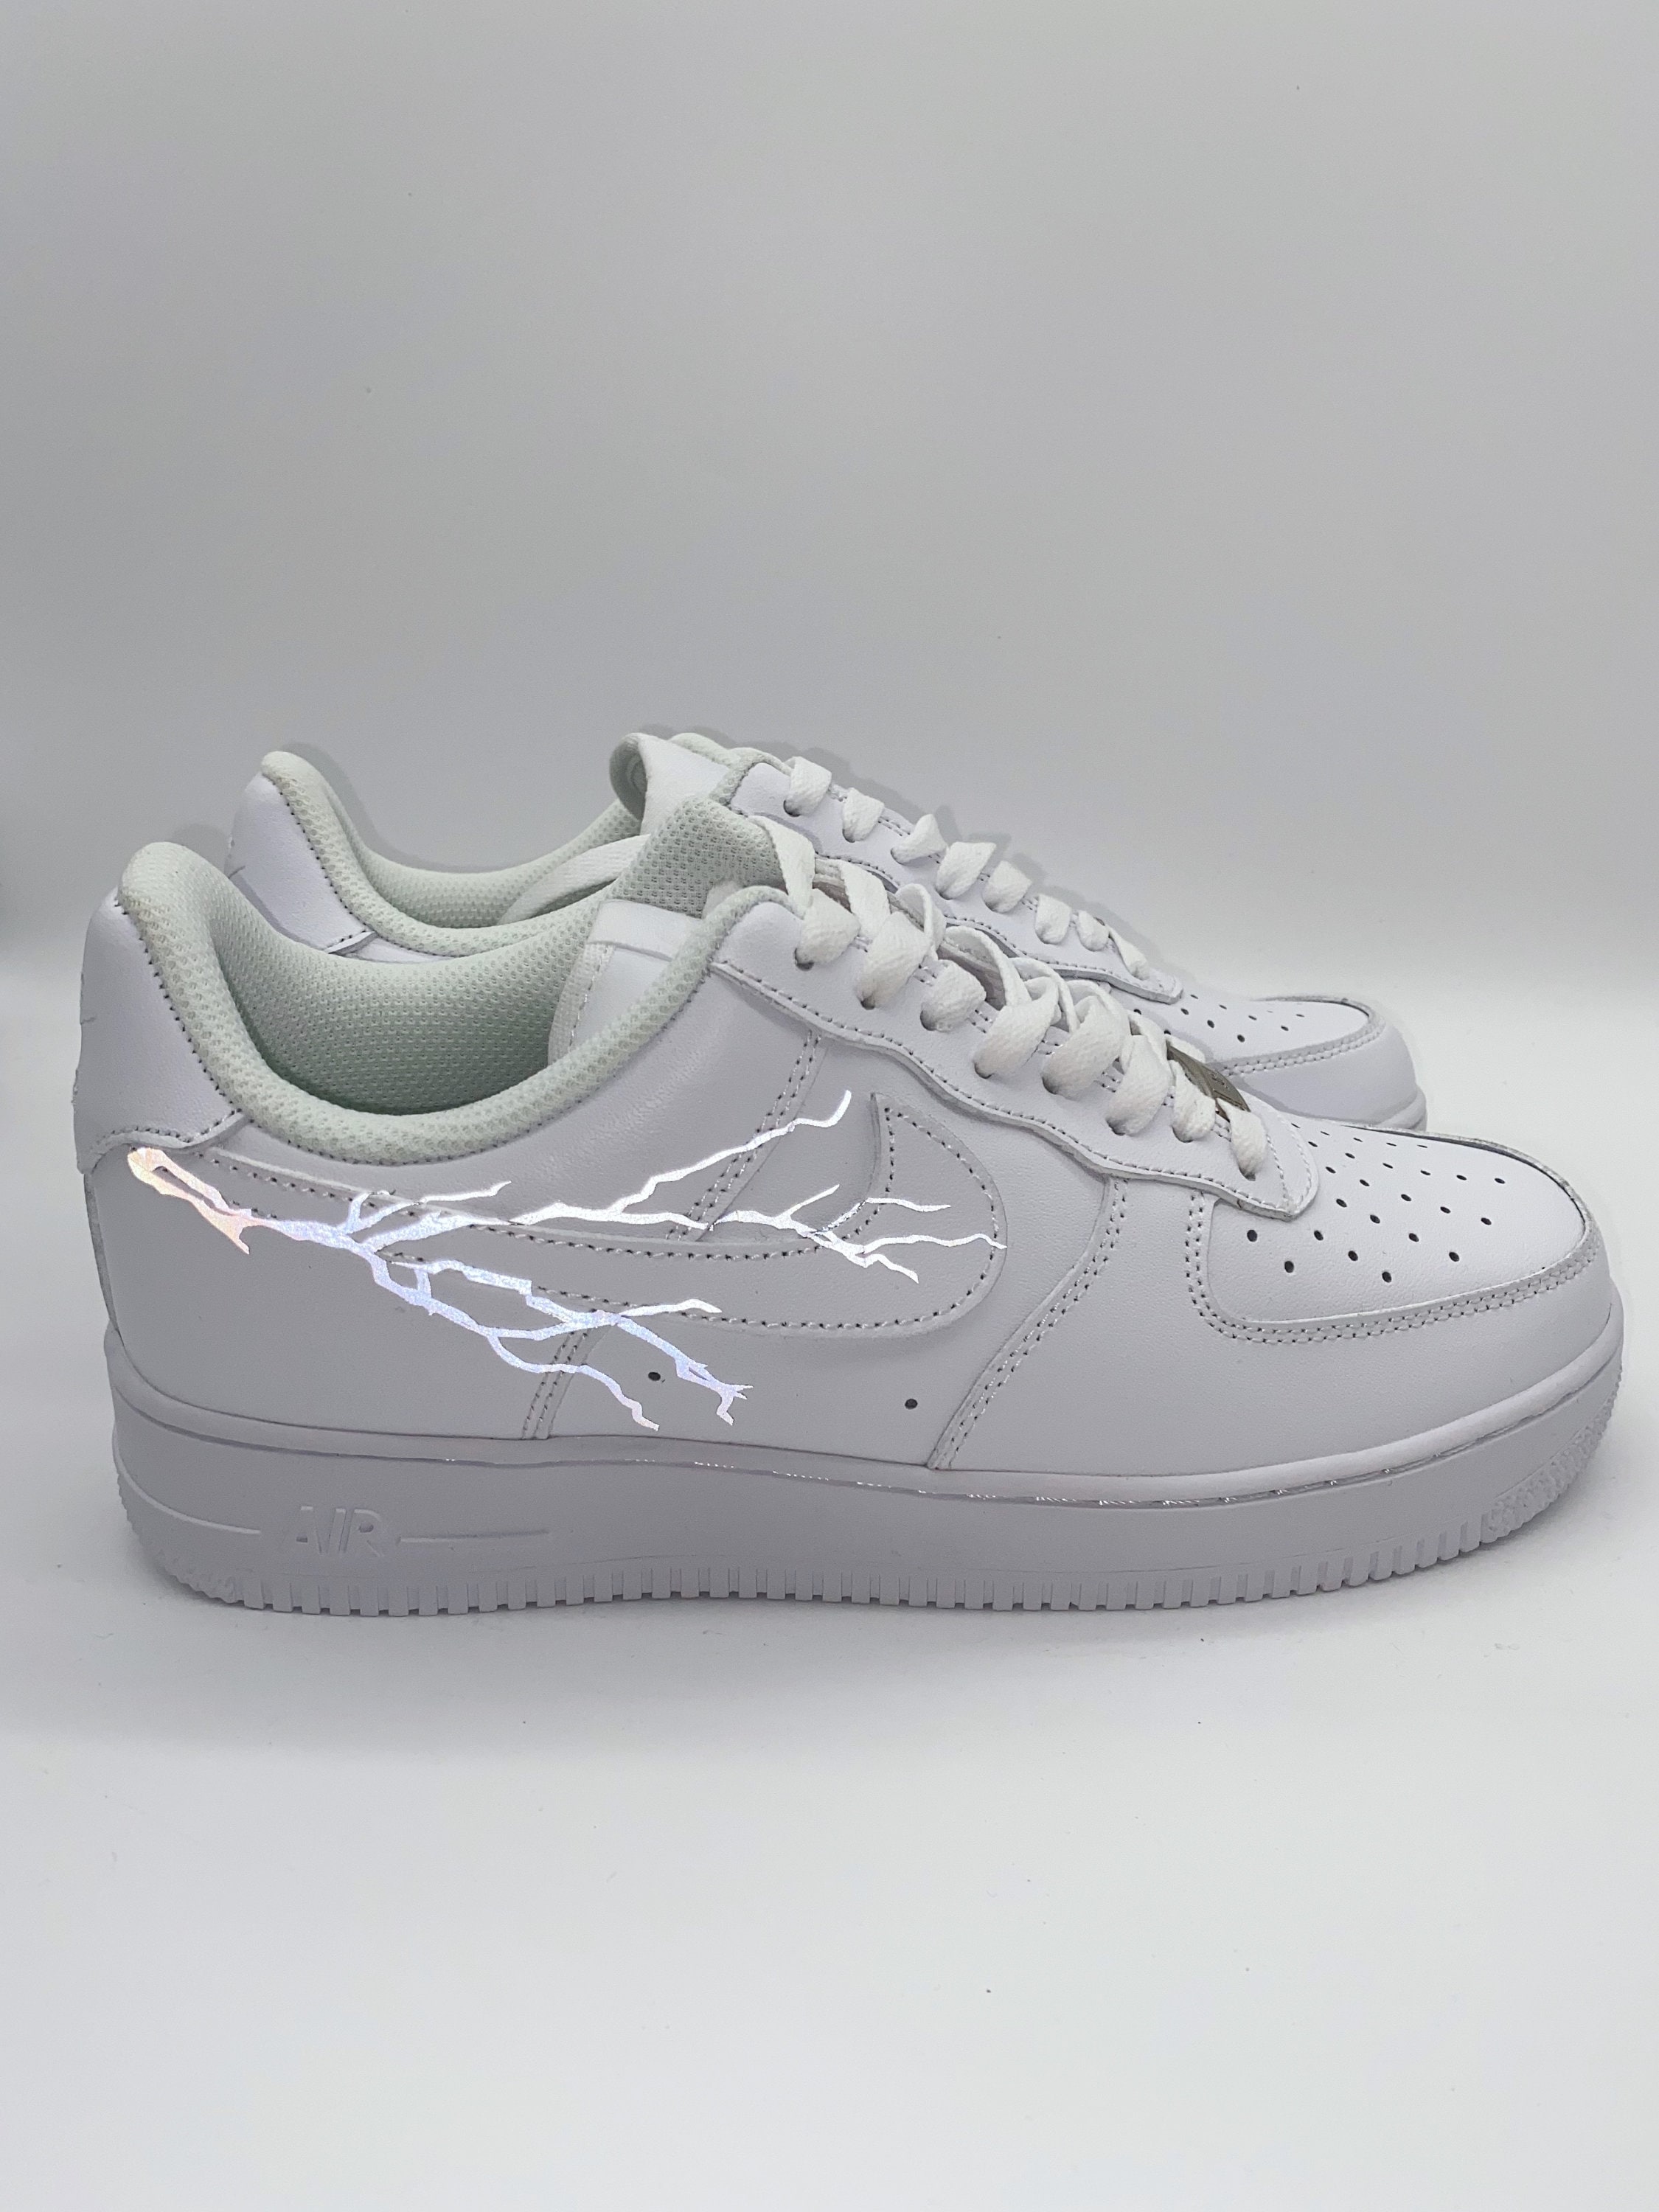 3M Reflective Lightning Design - Custom Nike Air Force 1 Trainers